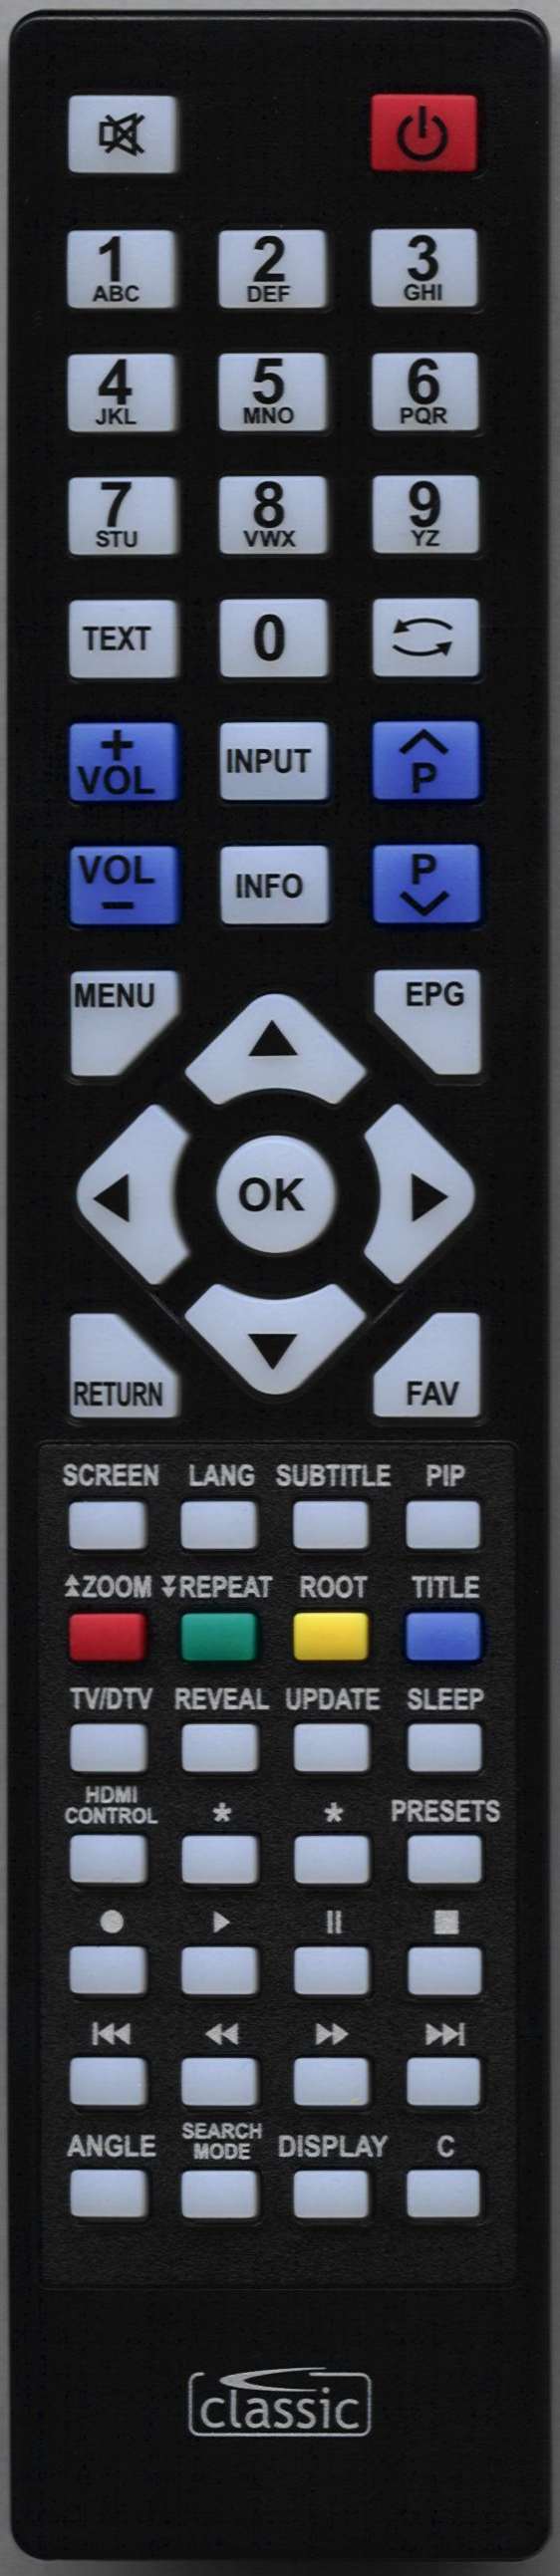 CELCUS LCD19913HD Remote Control Alternative 